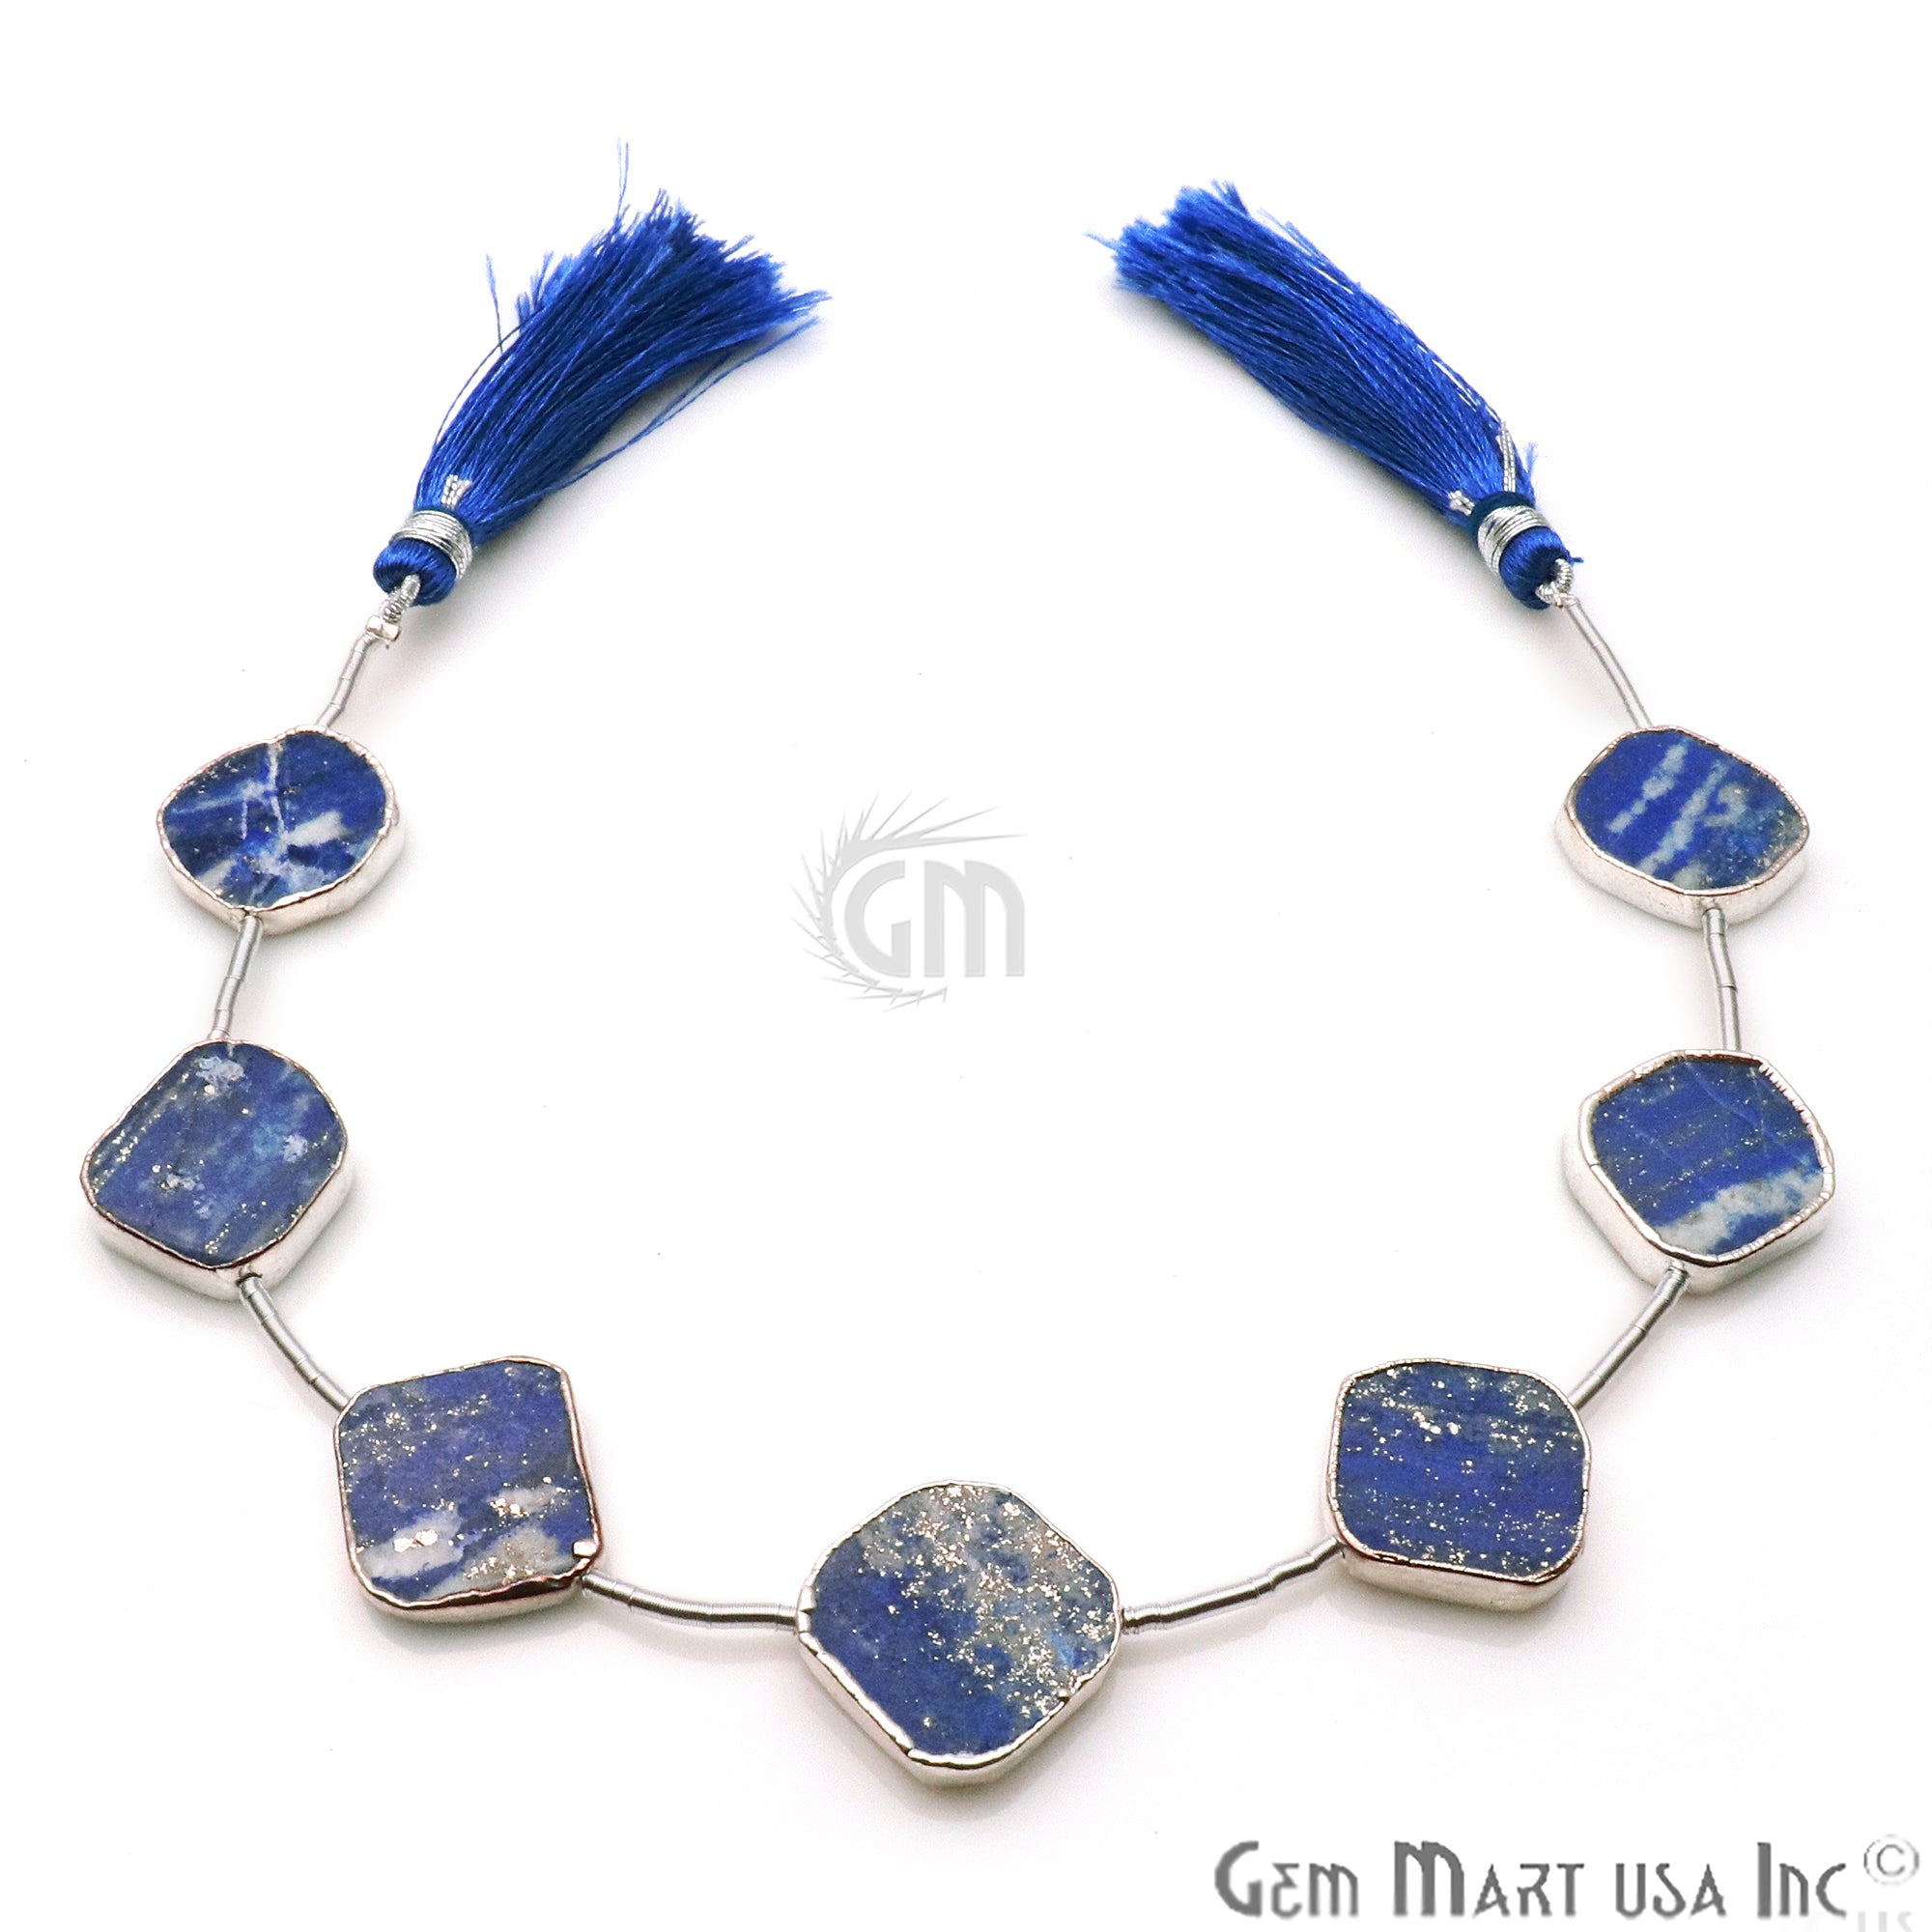 Lapis Free Form 18x15mm Silver Edged Crafting Beads Gemstone Strands 9INCH - GemMartUSA